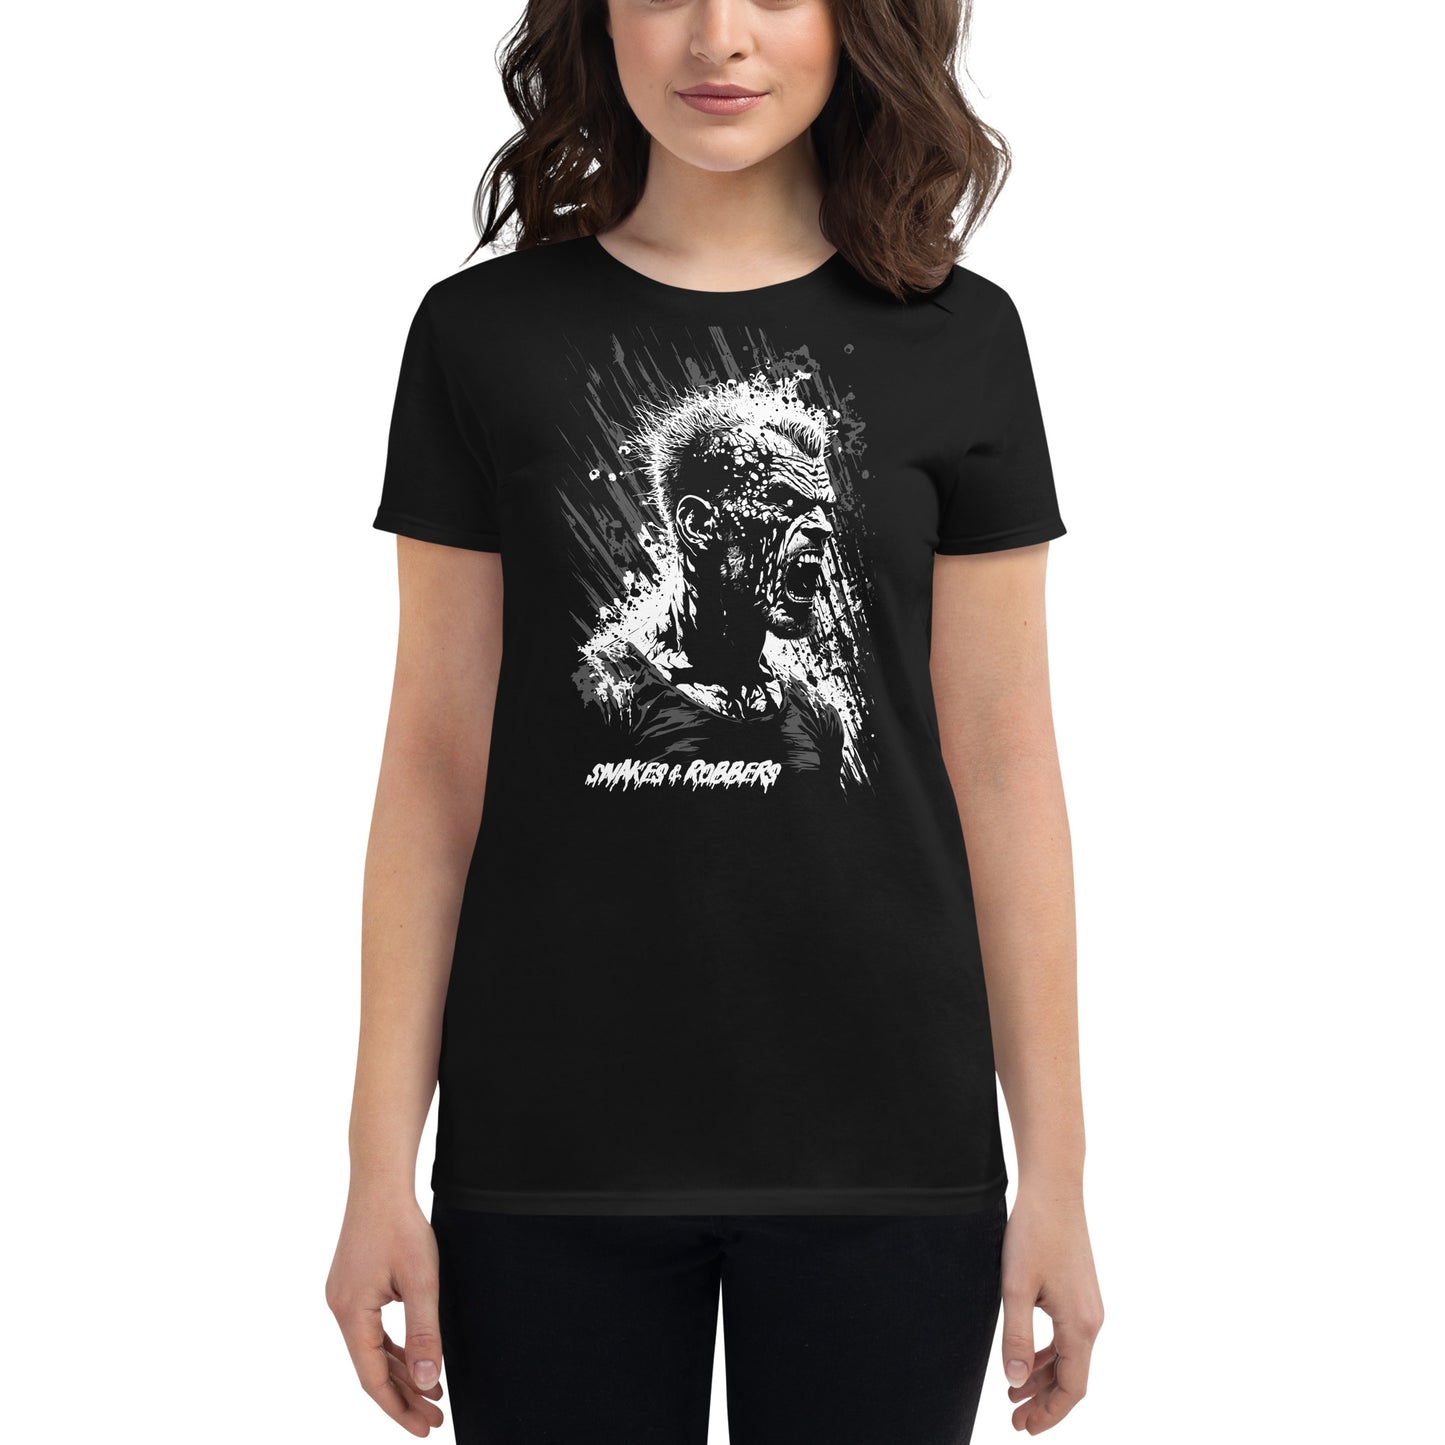 Classics Zombie Women's Fashion Fit T-shirt